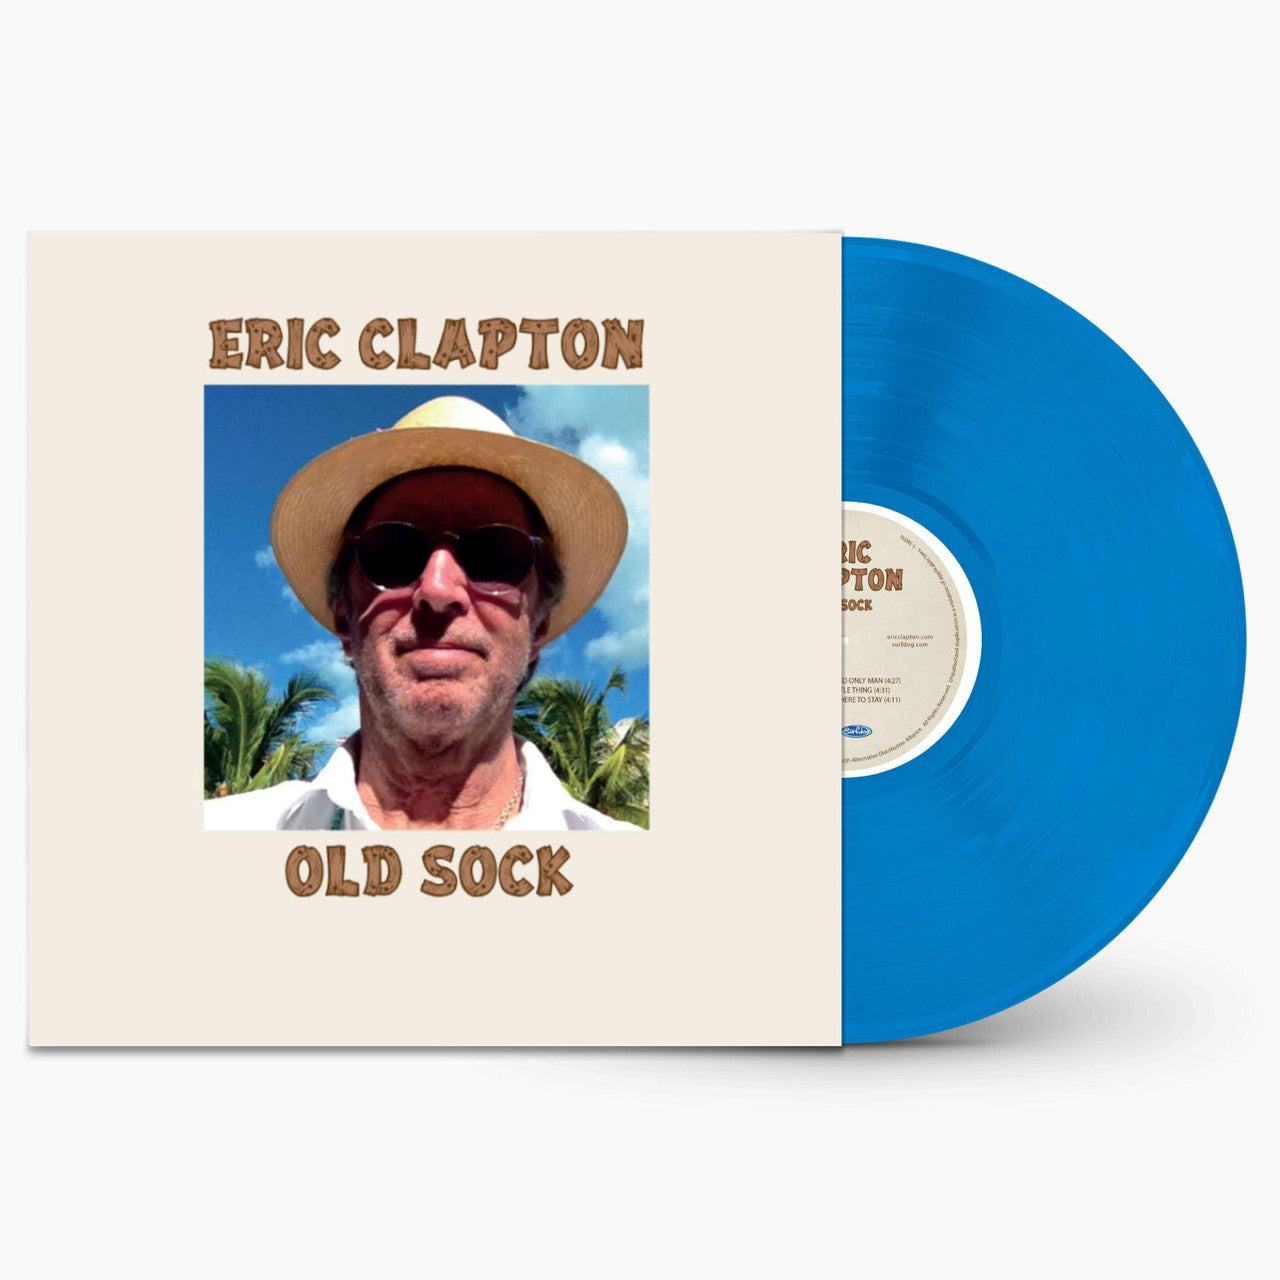 Eric Clapton - Old Sock [2LP] (Blue Vinyl, reissue)